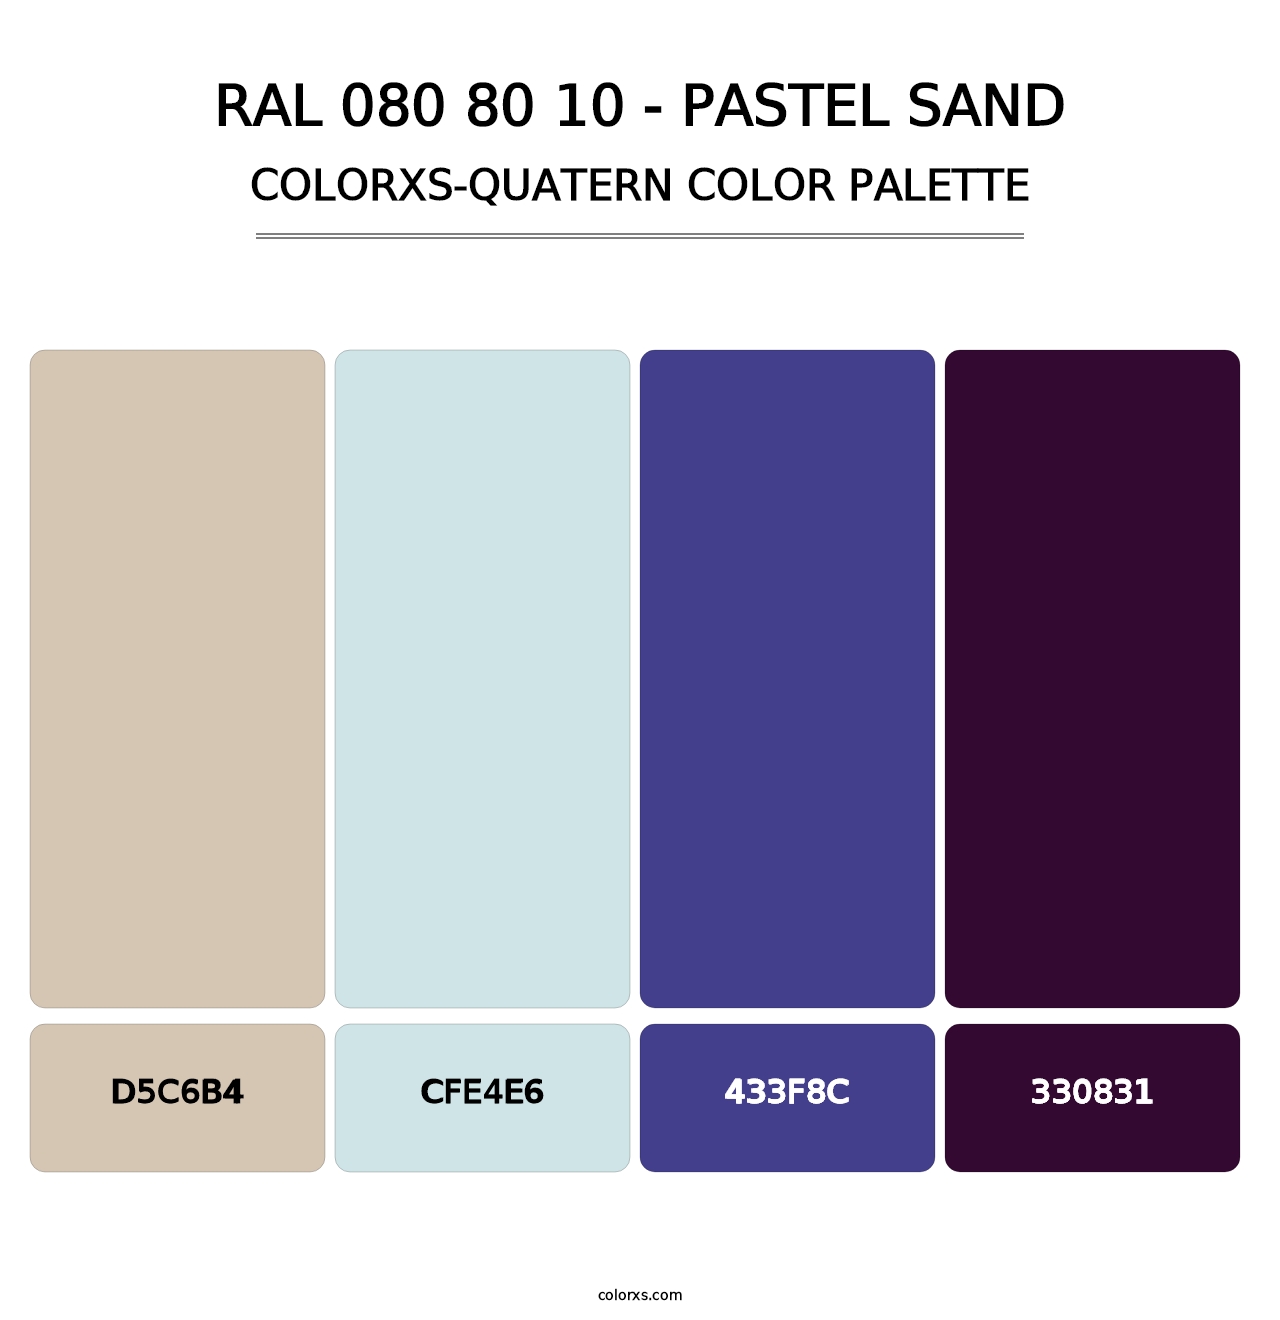 RAL 080 80 10 - Pastel Sand - Colorxs Quatern Palette